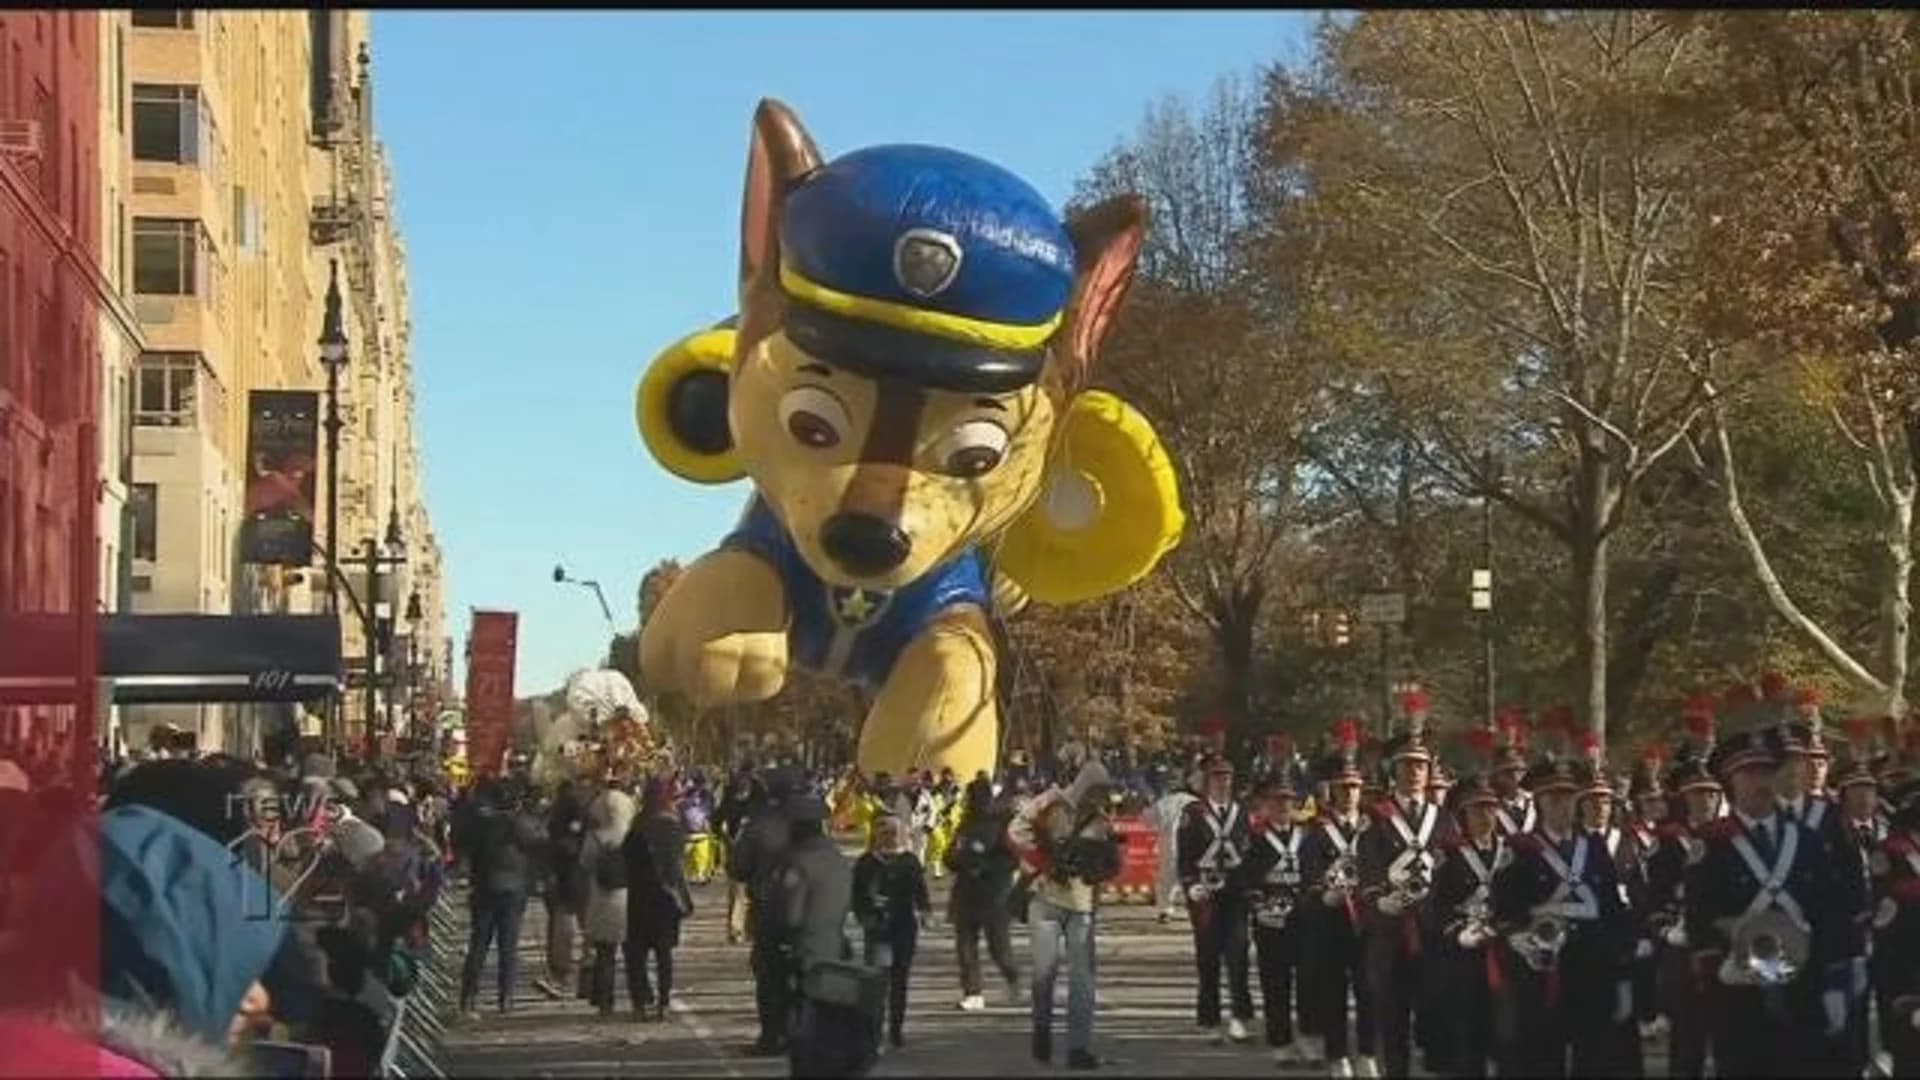 2020 Macy's Thanksgiving Day Parade to go virtual